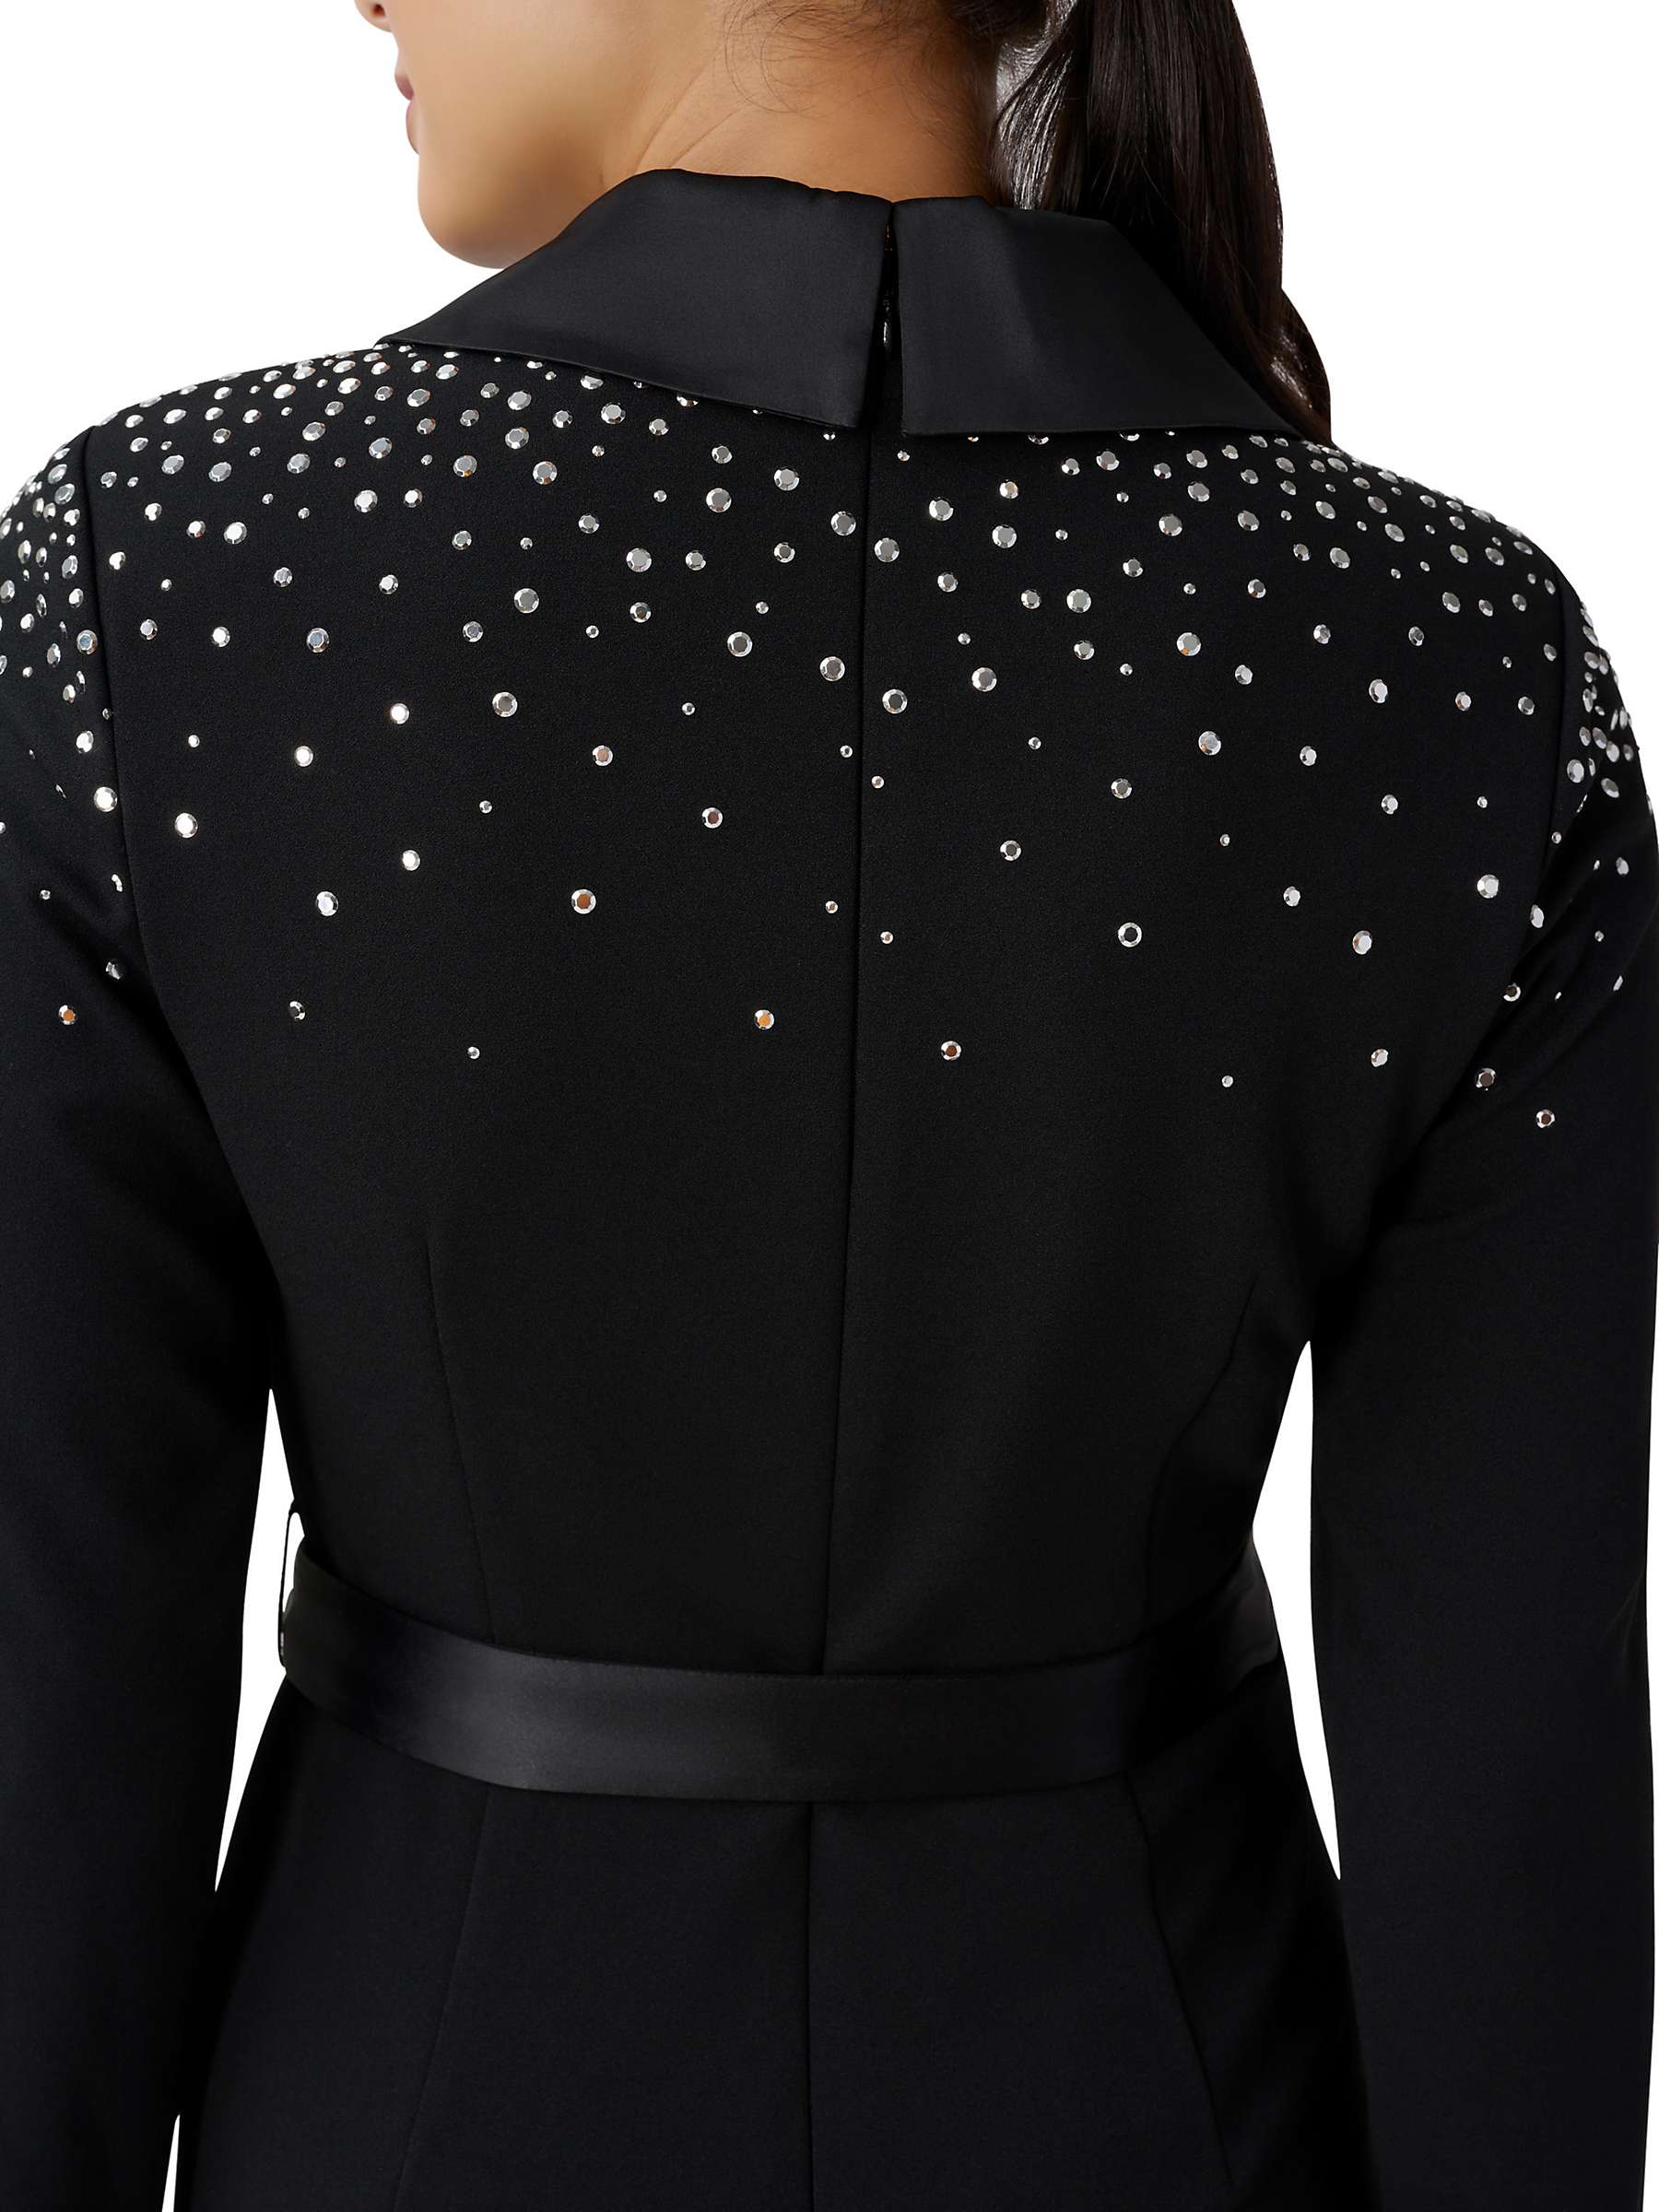 Buy Adrianna Papell Embellished Tuxedo Knee Length Dress, Black Online at johnlewis.com